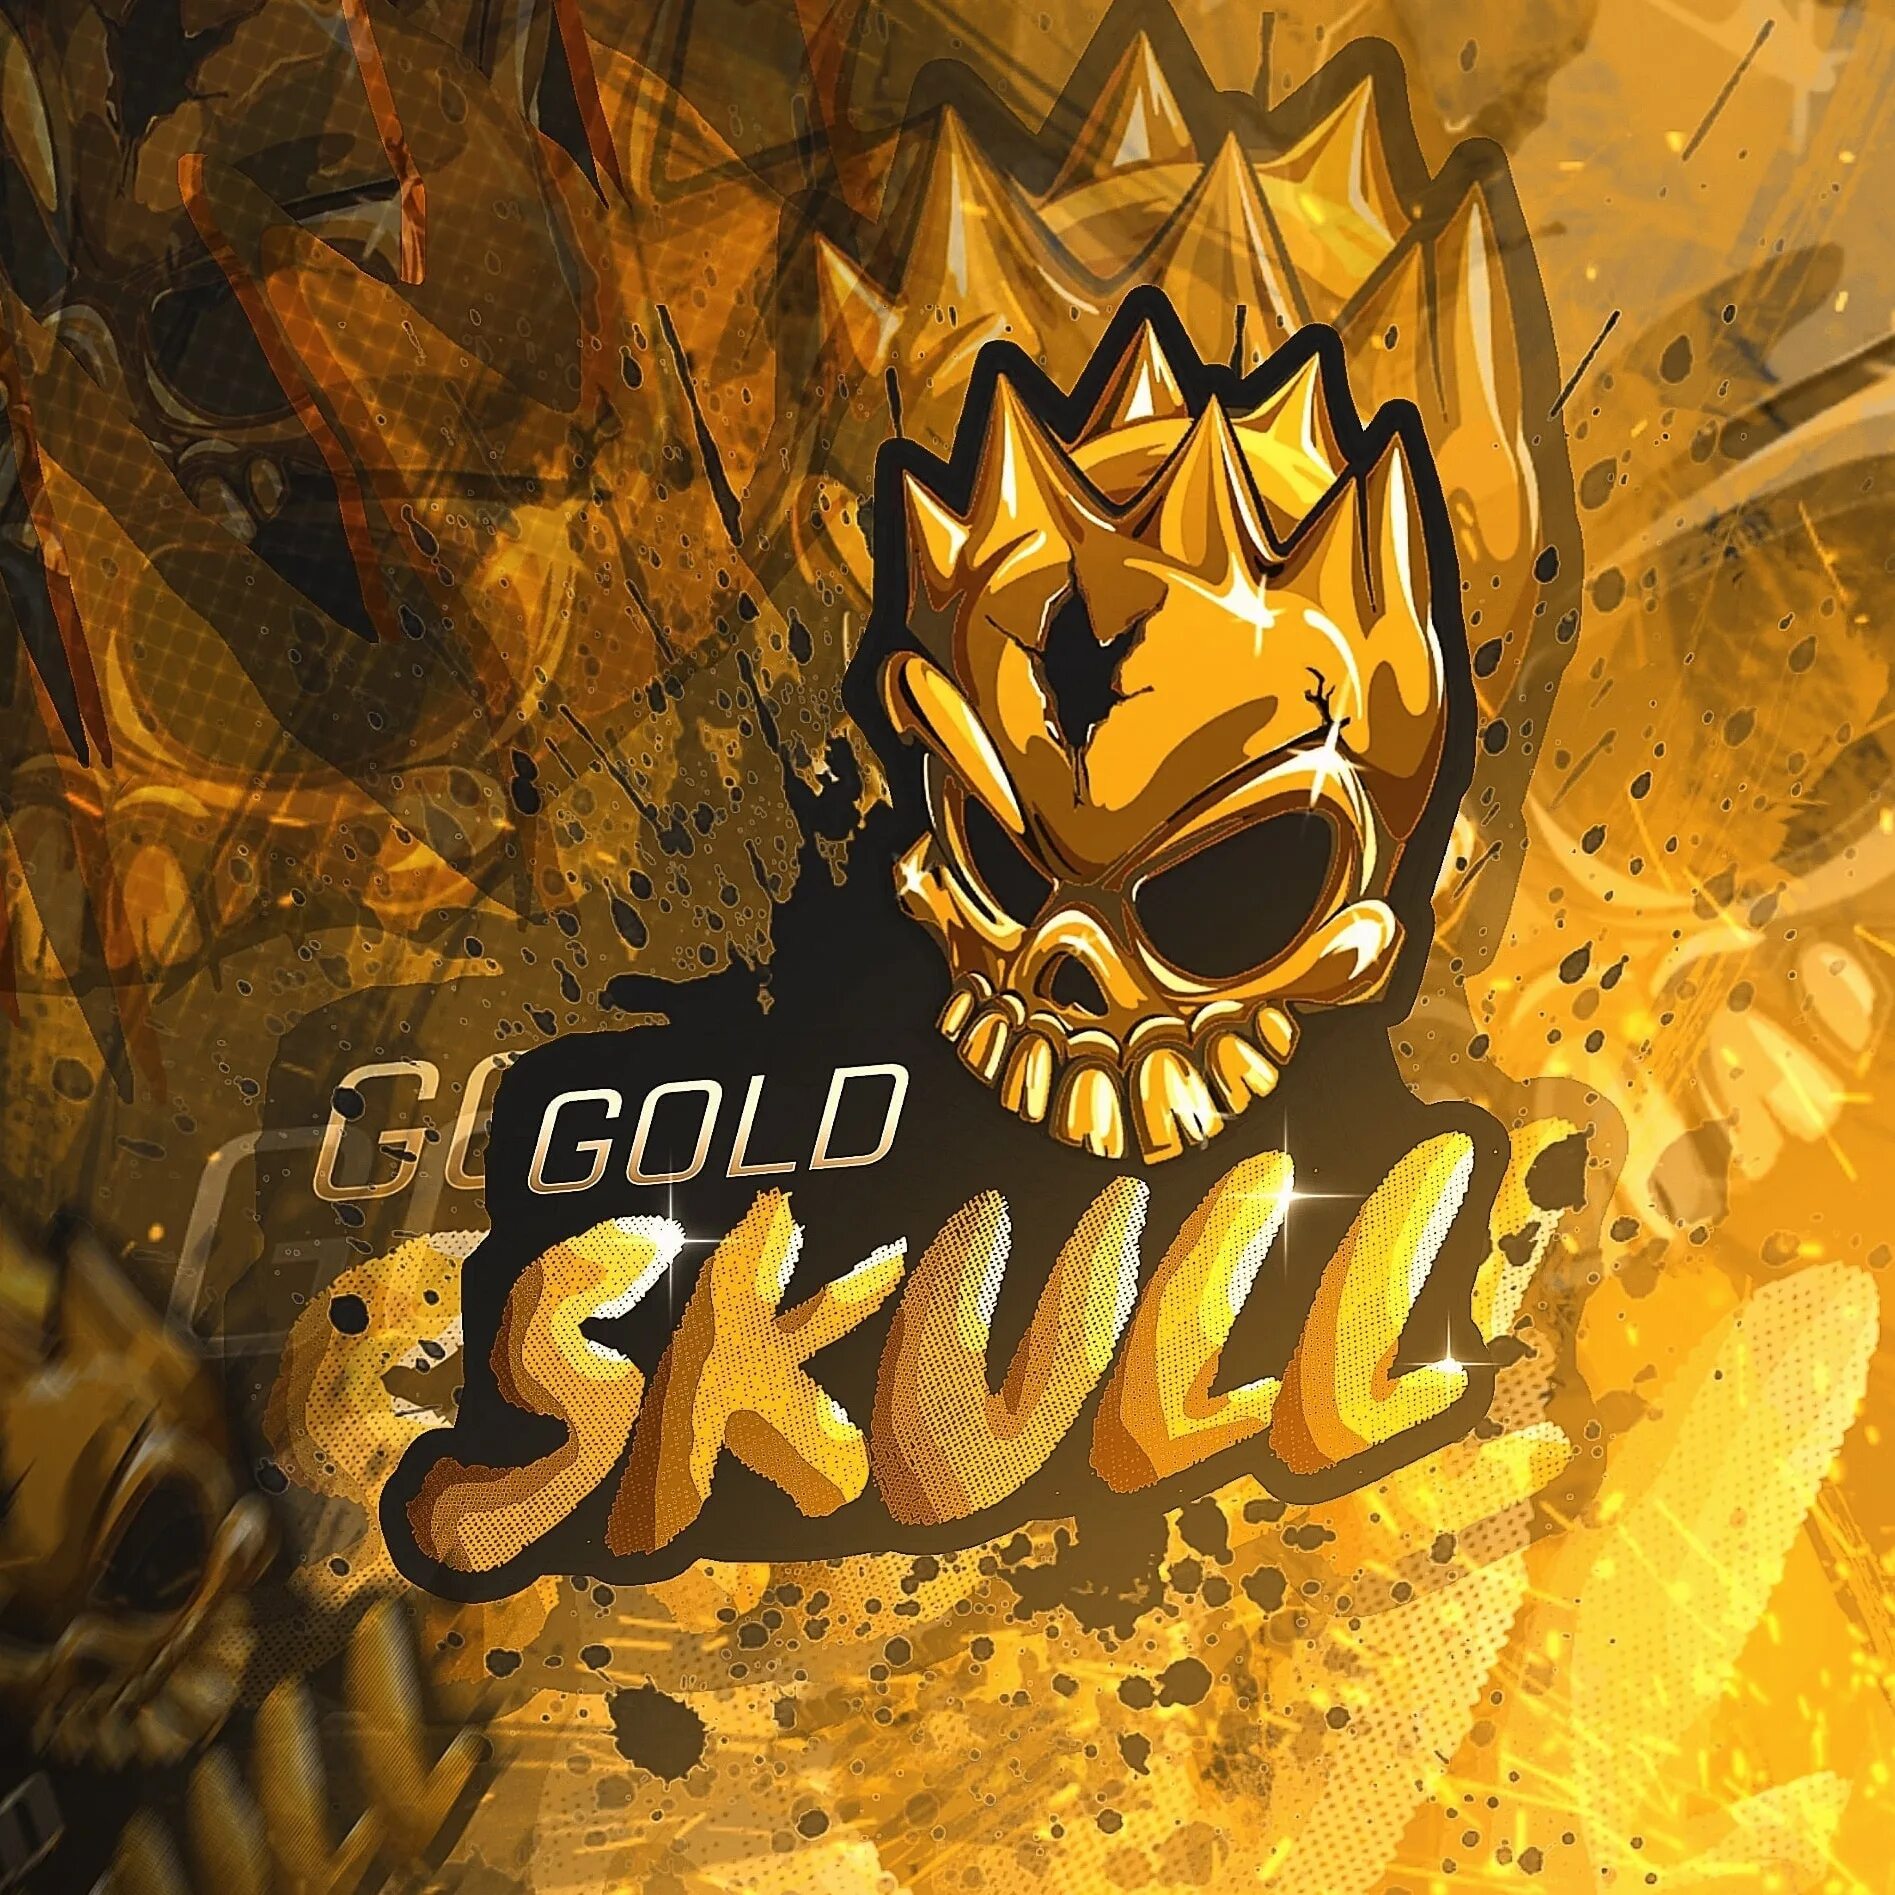 02 gold. Gold Skull стандофф 2. Наклейка Gold Skull. Gold Skull Standoff 2 наклейка. Золотые наклейки стандофф 2.